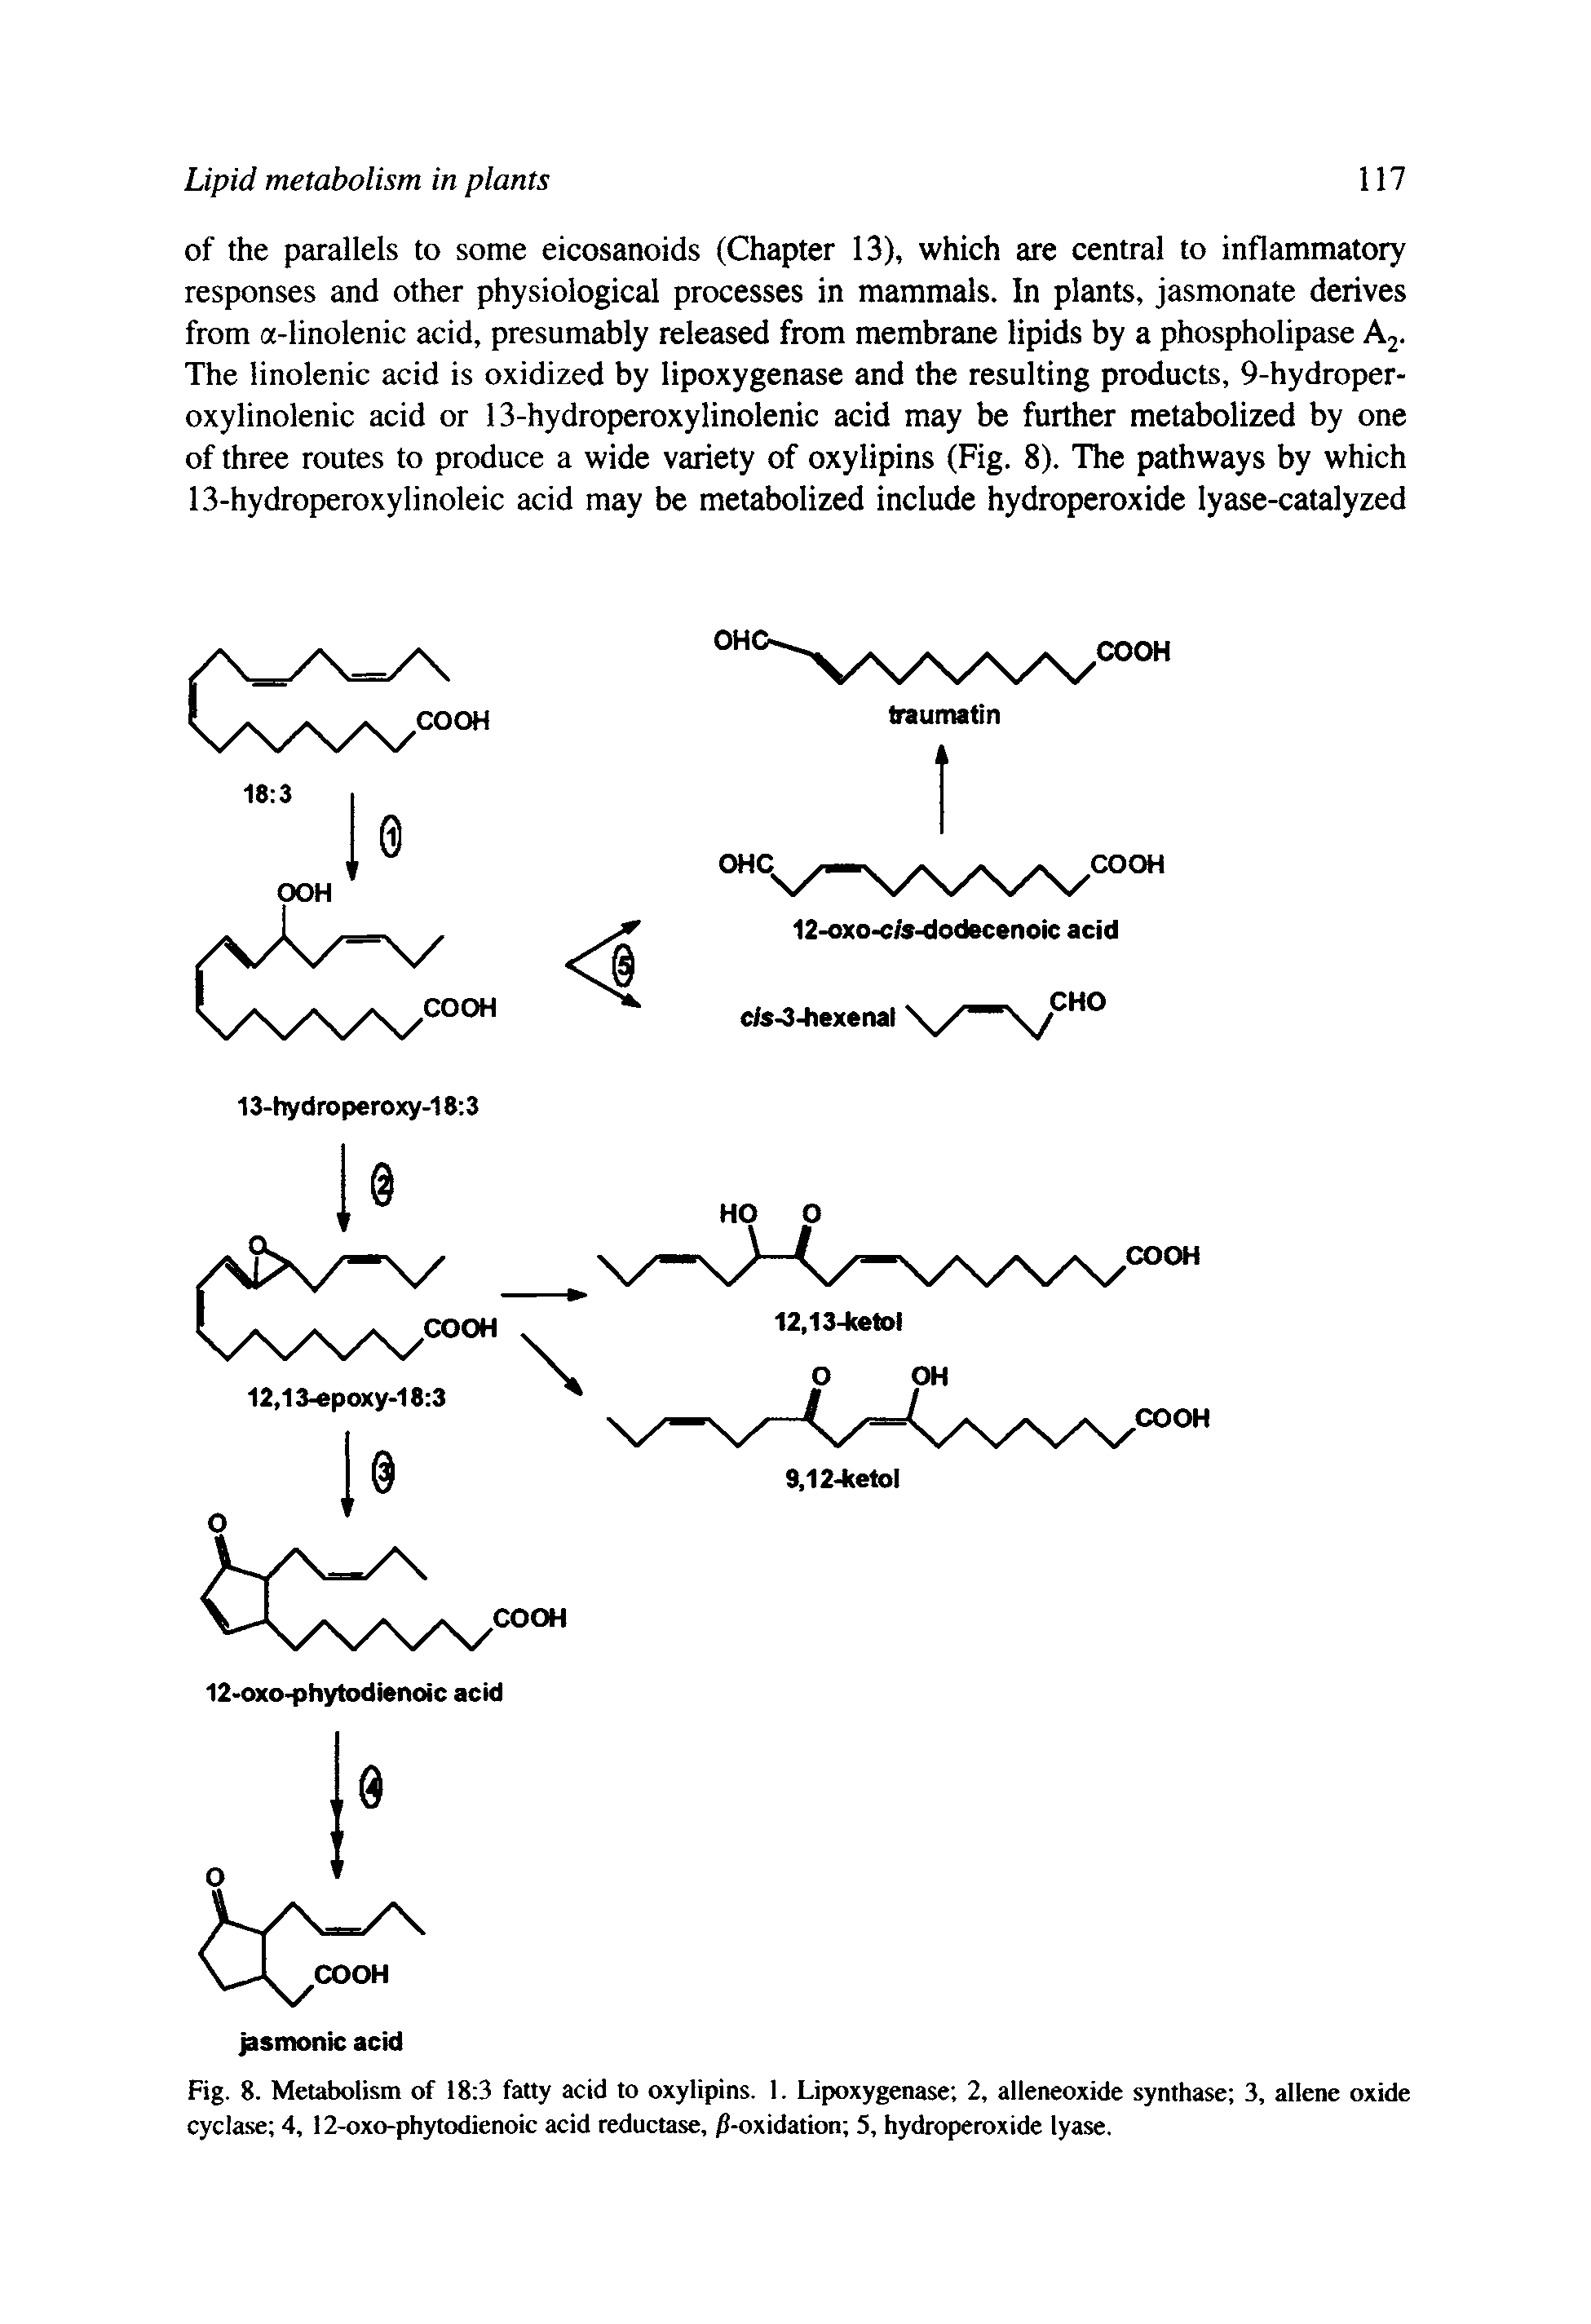 Fig. 8. Metabolism of 18 3 fatty acid to oxylipins. I. Lipoxygenase 2, alleneoxide synthase 3, allene oxide cyclase 4, 12-oxo-phytodienoic acid reductase, -oxidation 5, hydroperoxide lyase.